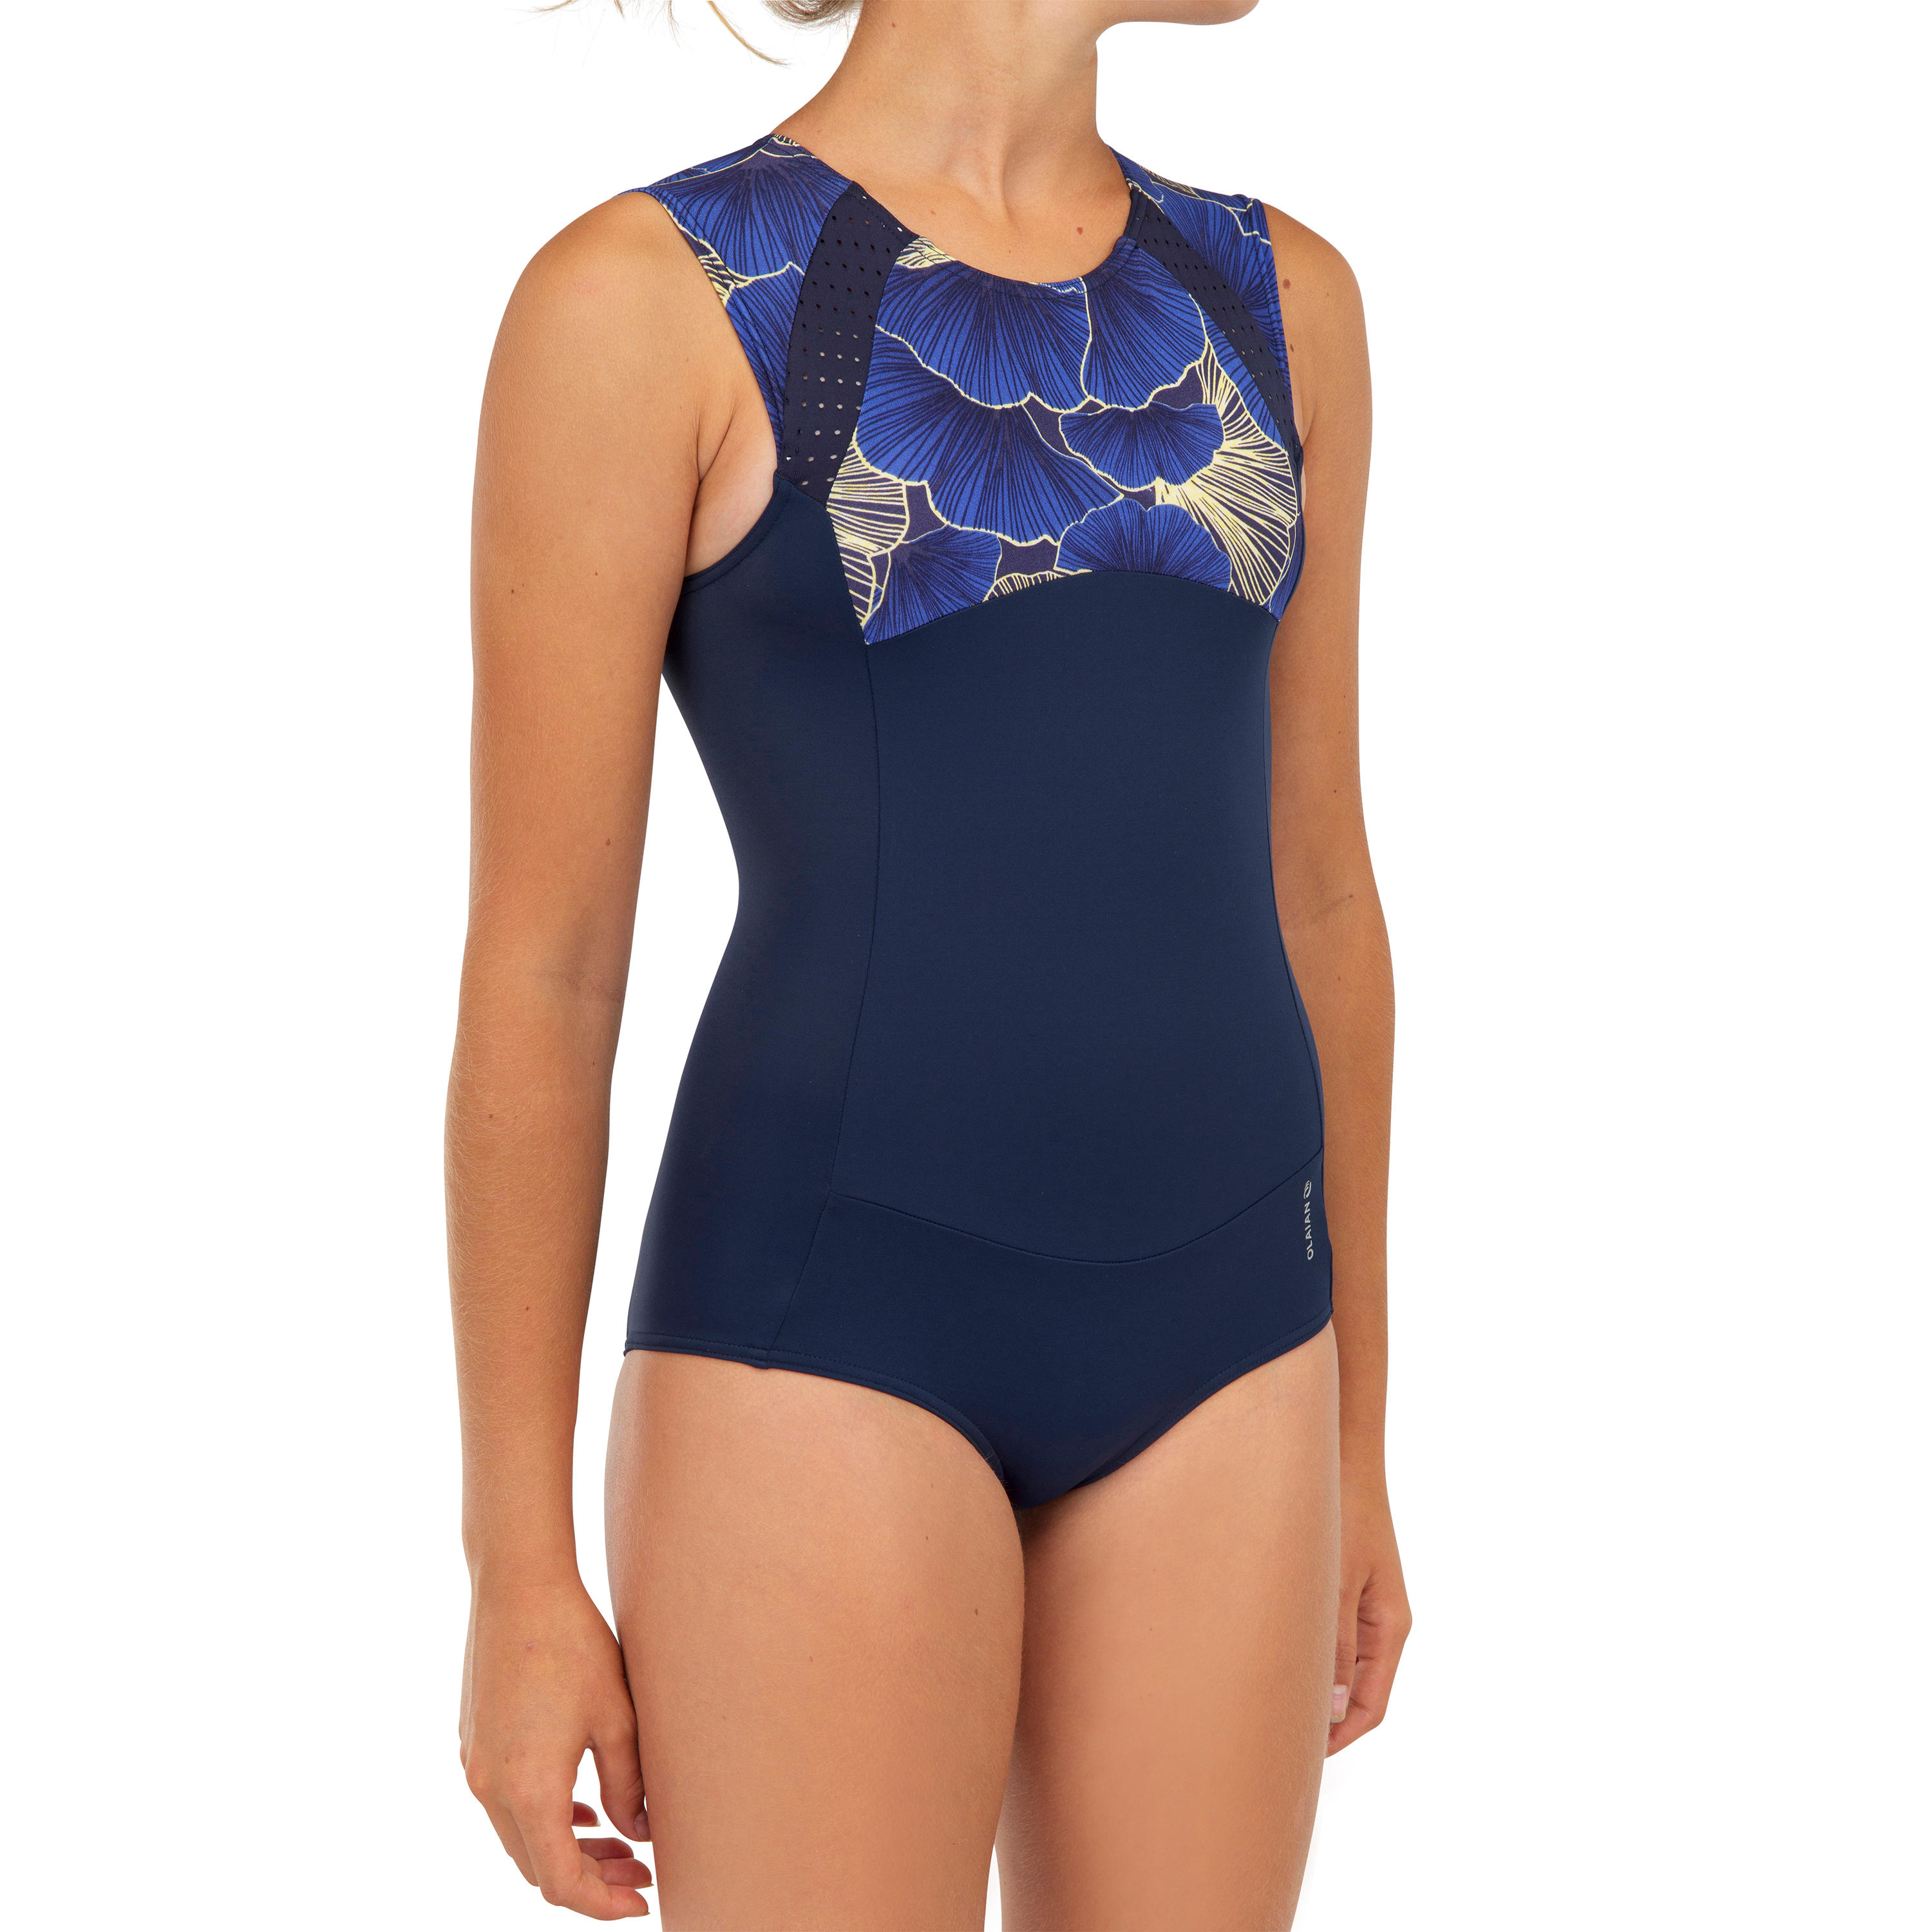 OLAIAN Badeanzug Mädchen Rückenreißverschluss 900 Manly Shibu blau